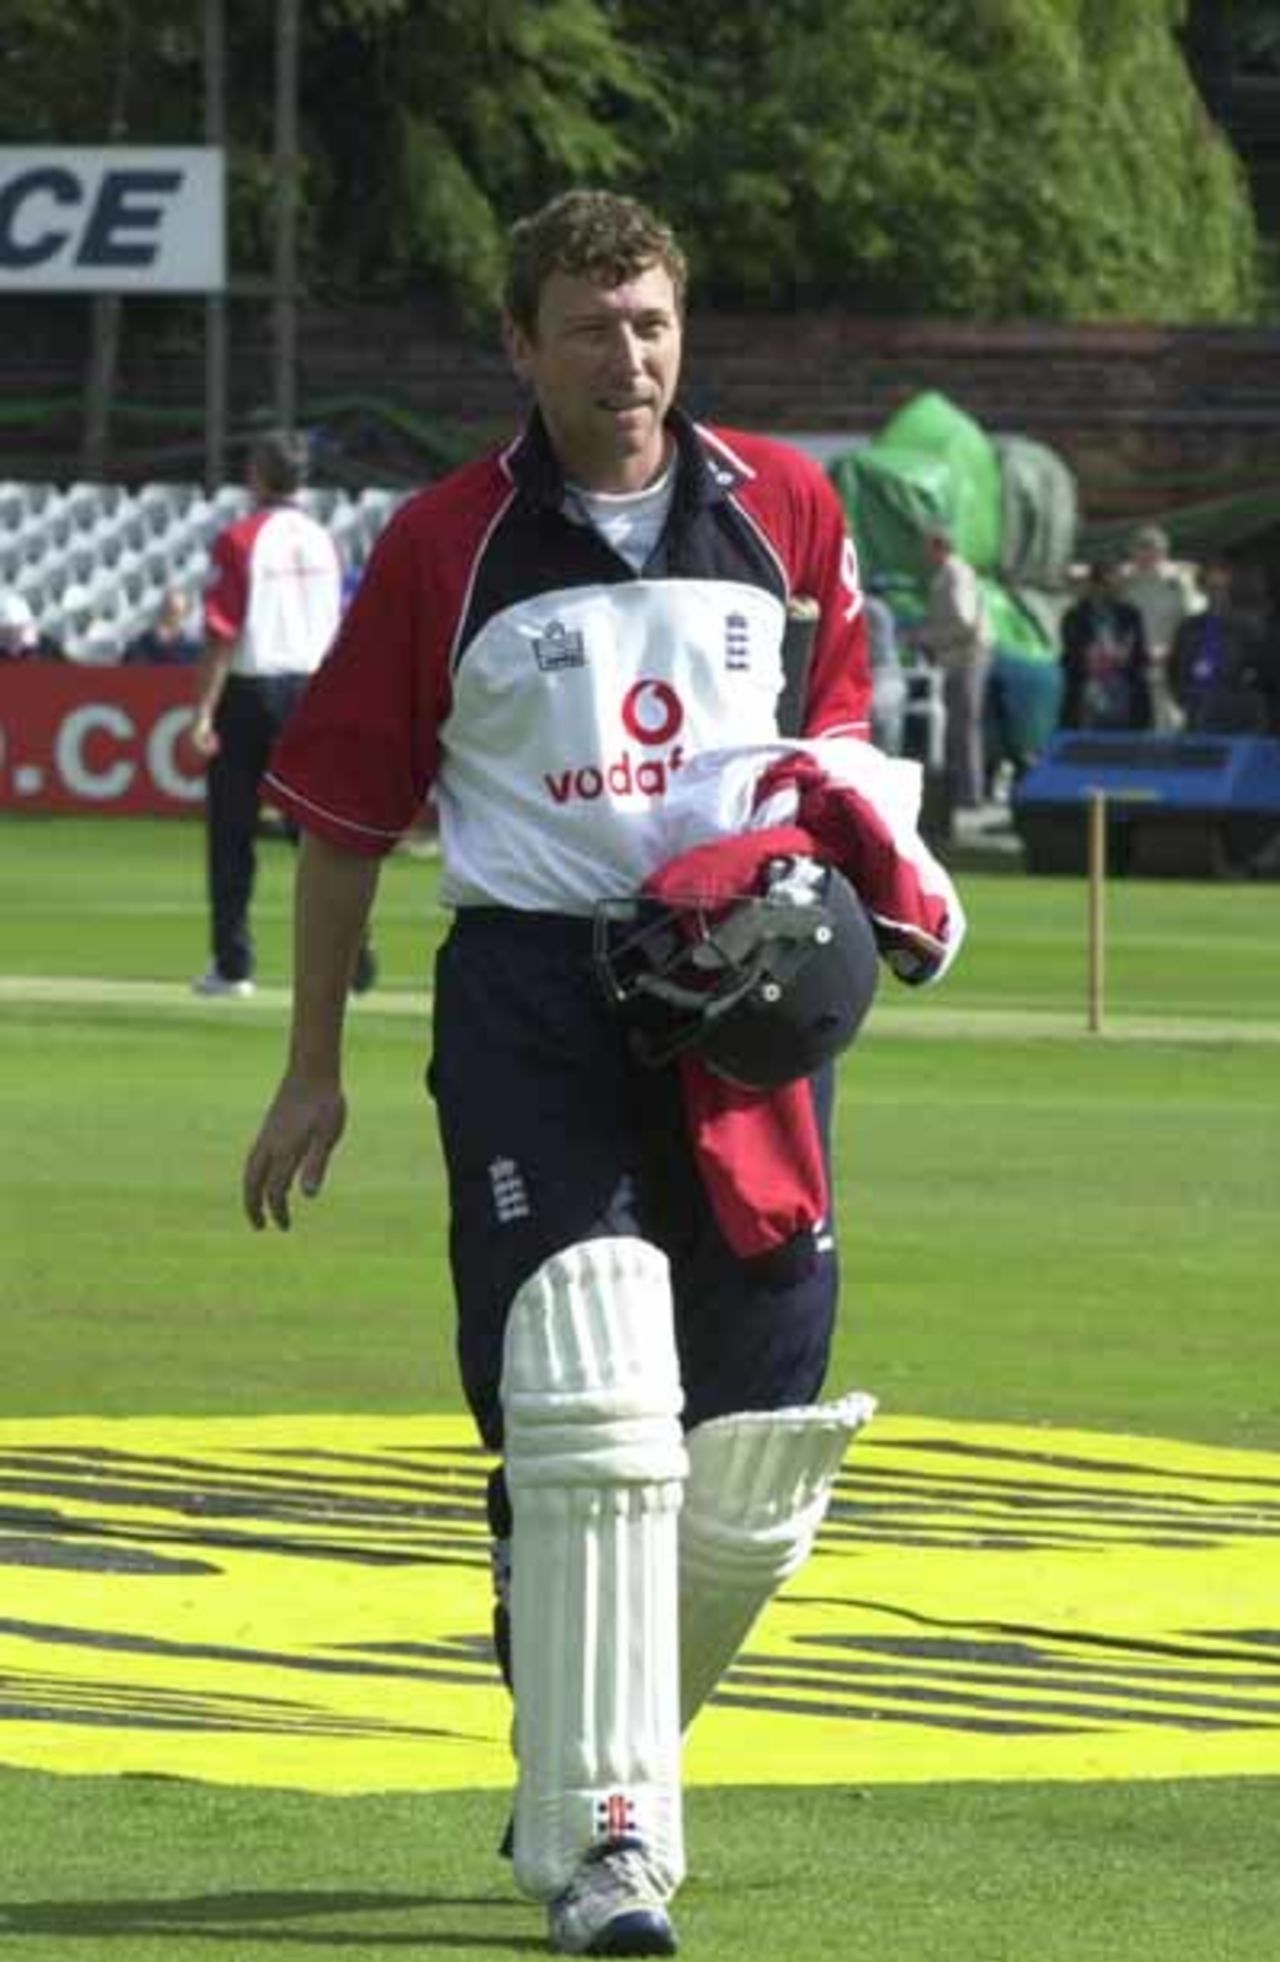 England v West Indies 2000 3rd test match at Leeds